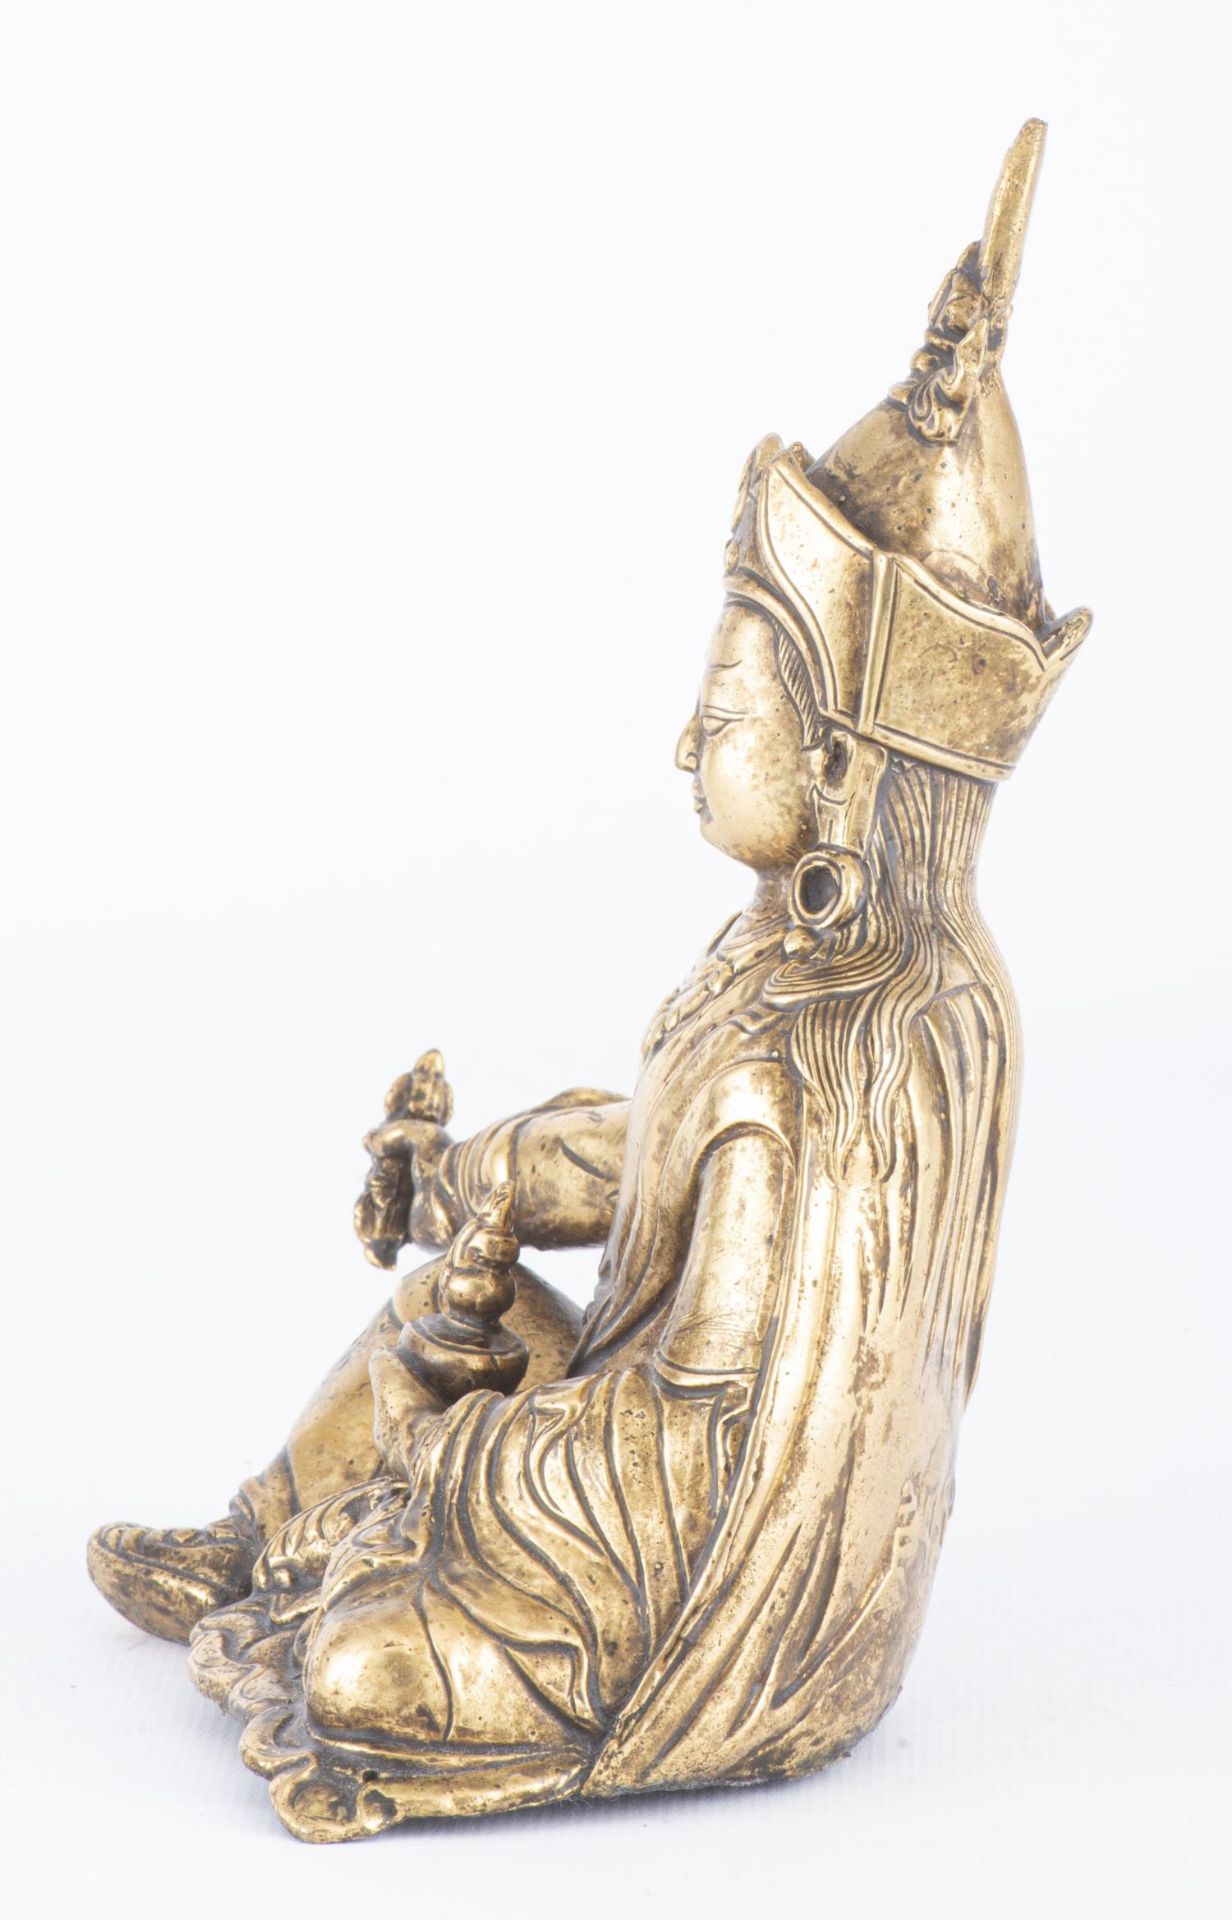 Lama du Tibet assis en bronze dor&amp;eacute;, XIX&amp;egrave;me... - Image 4 of 9